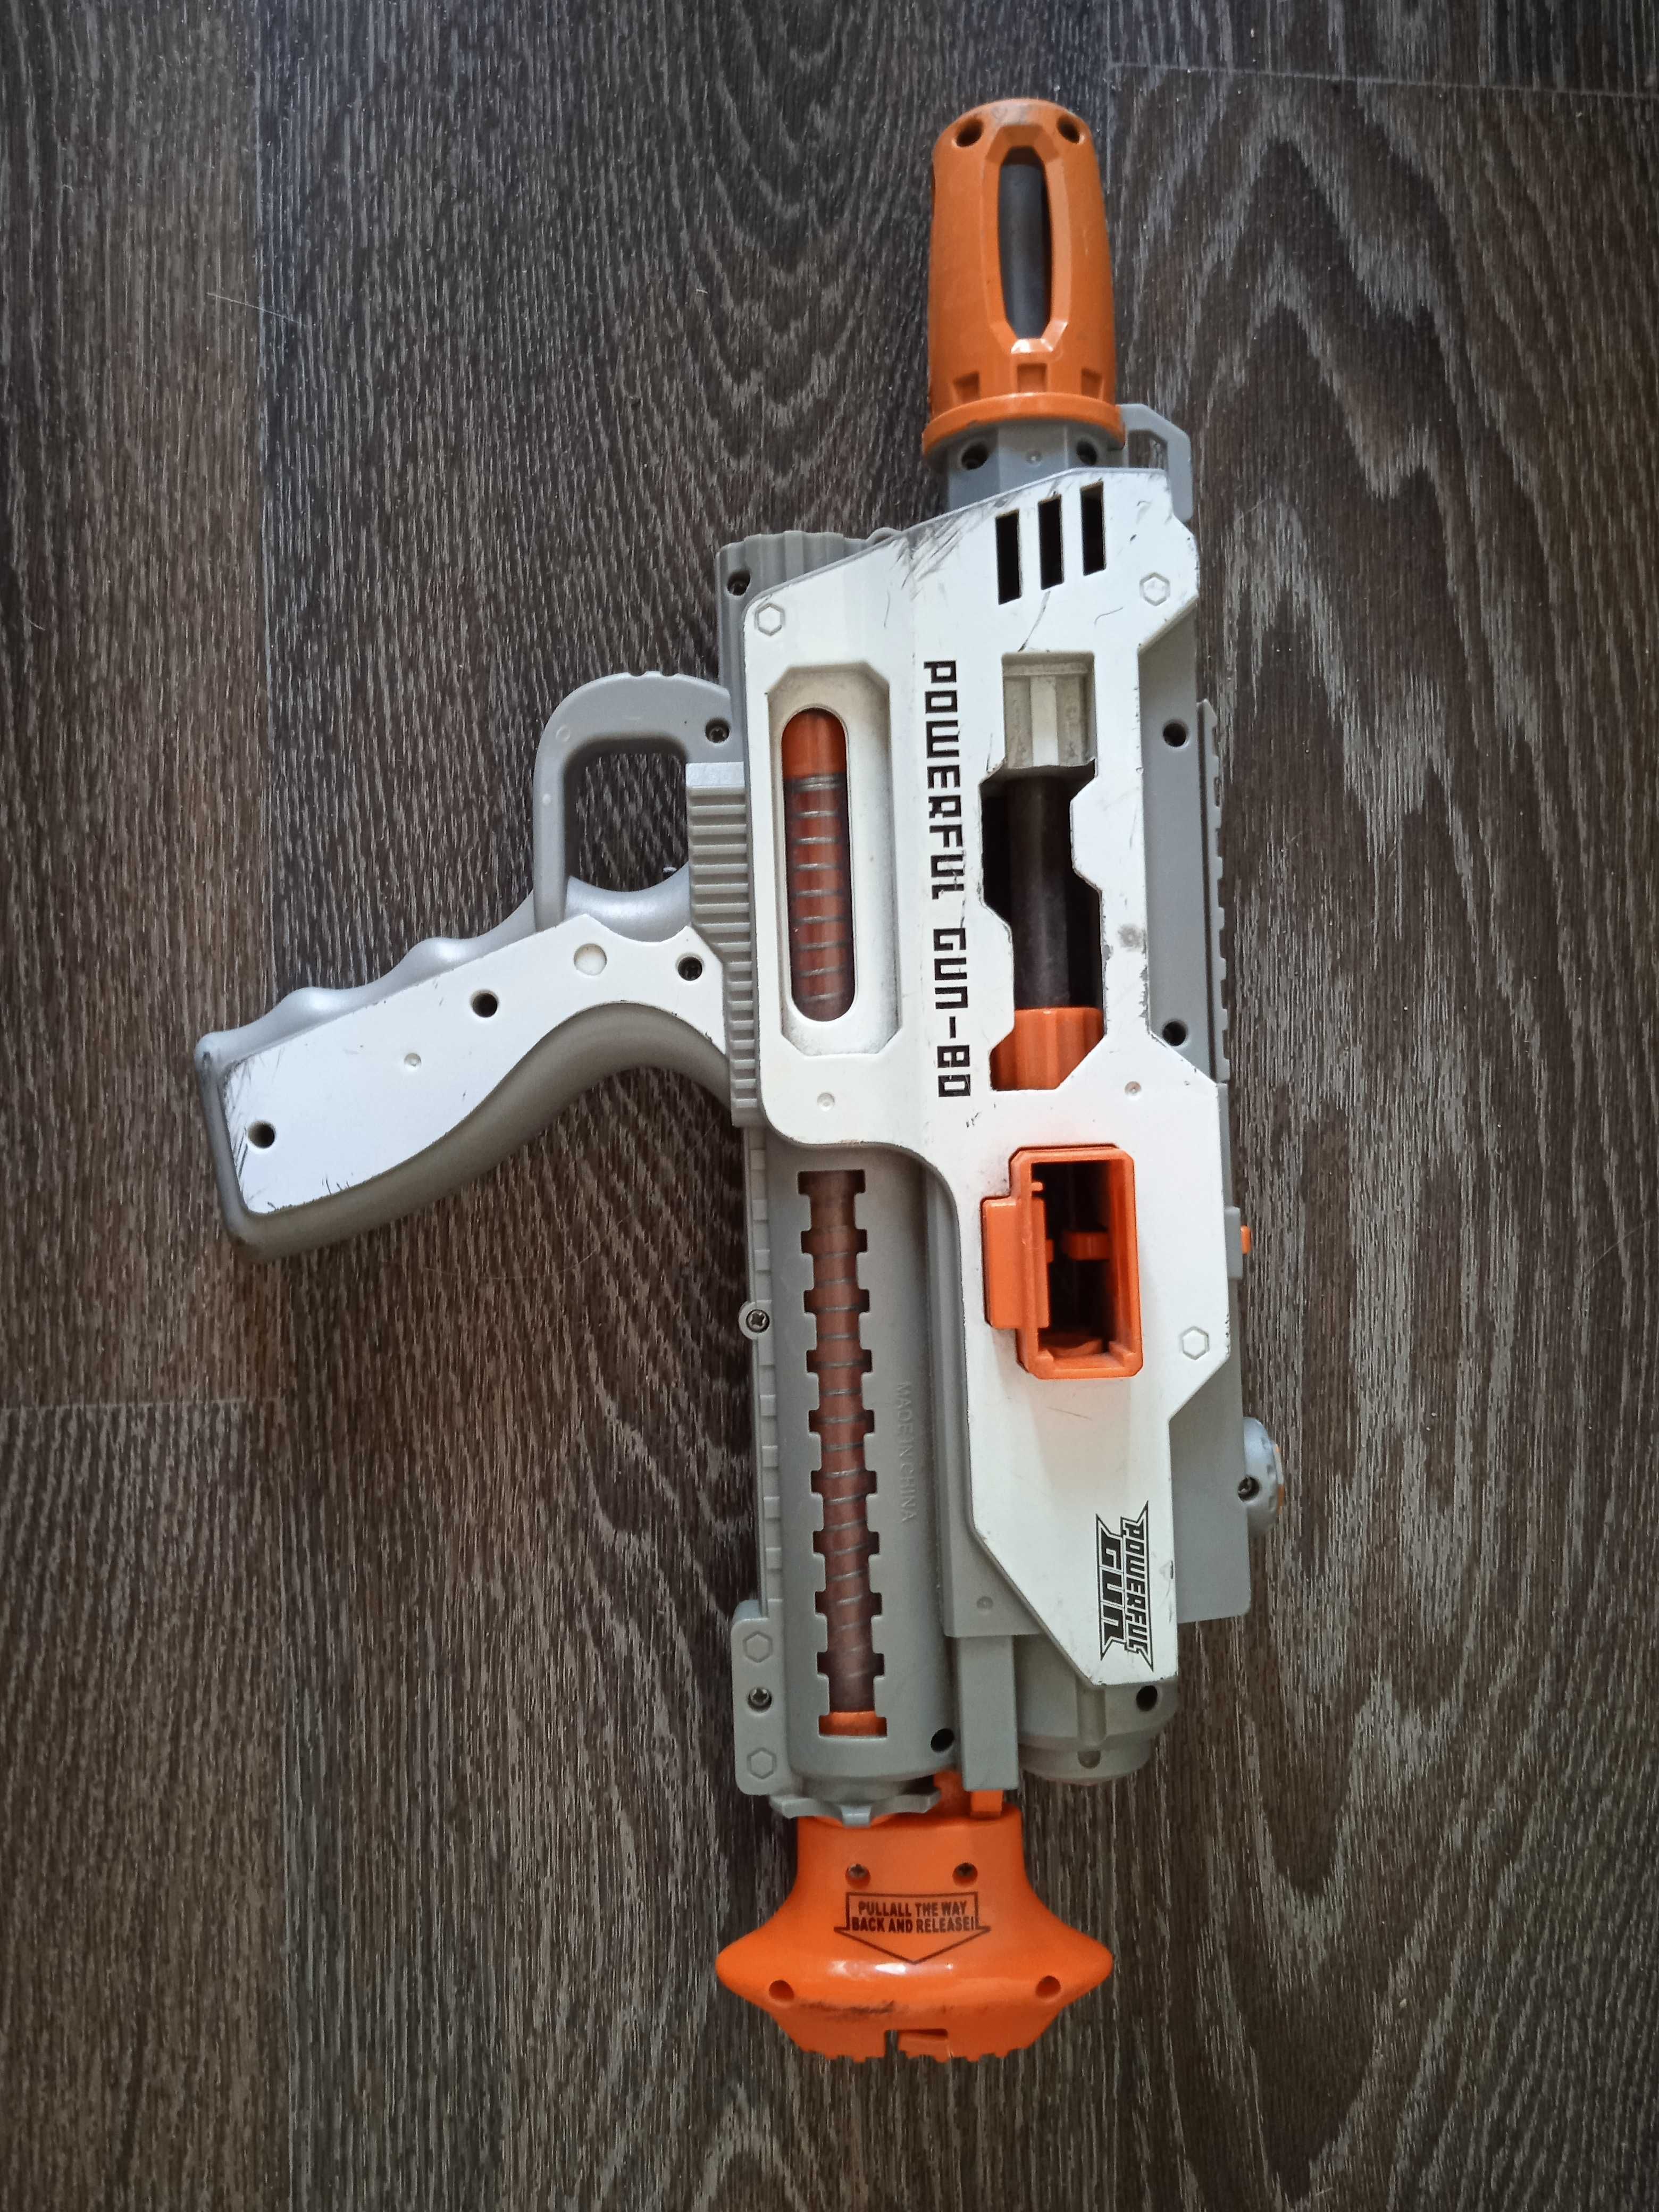 Nerf gun Powerful gun 80